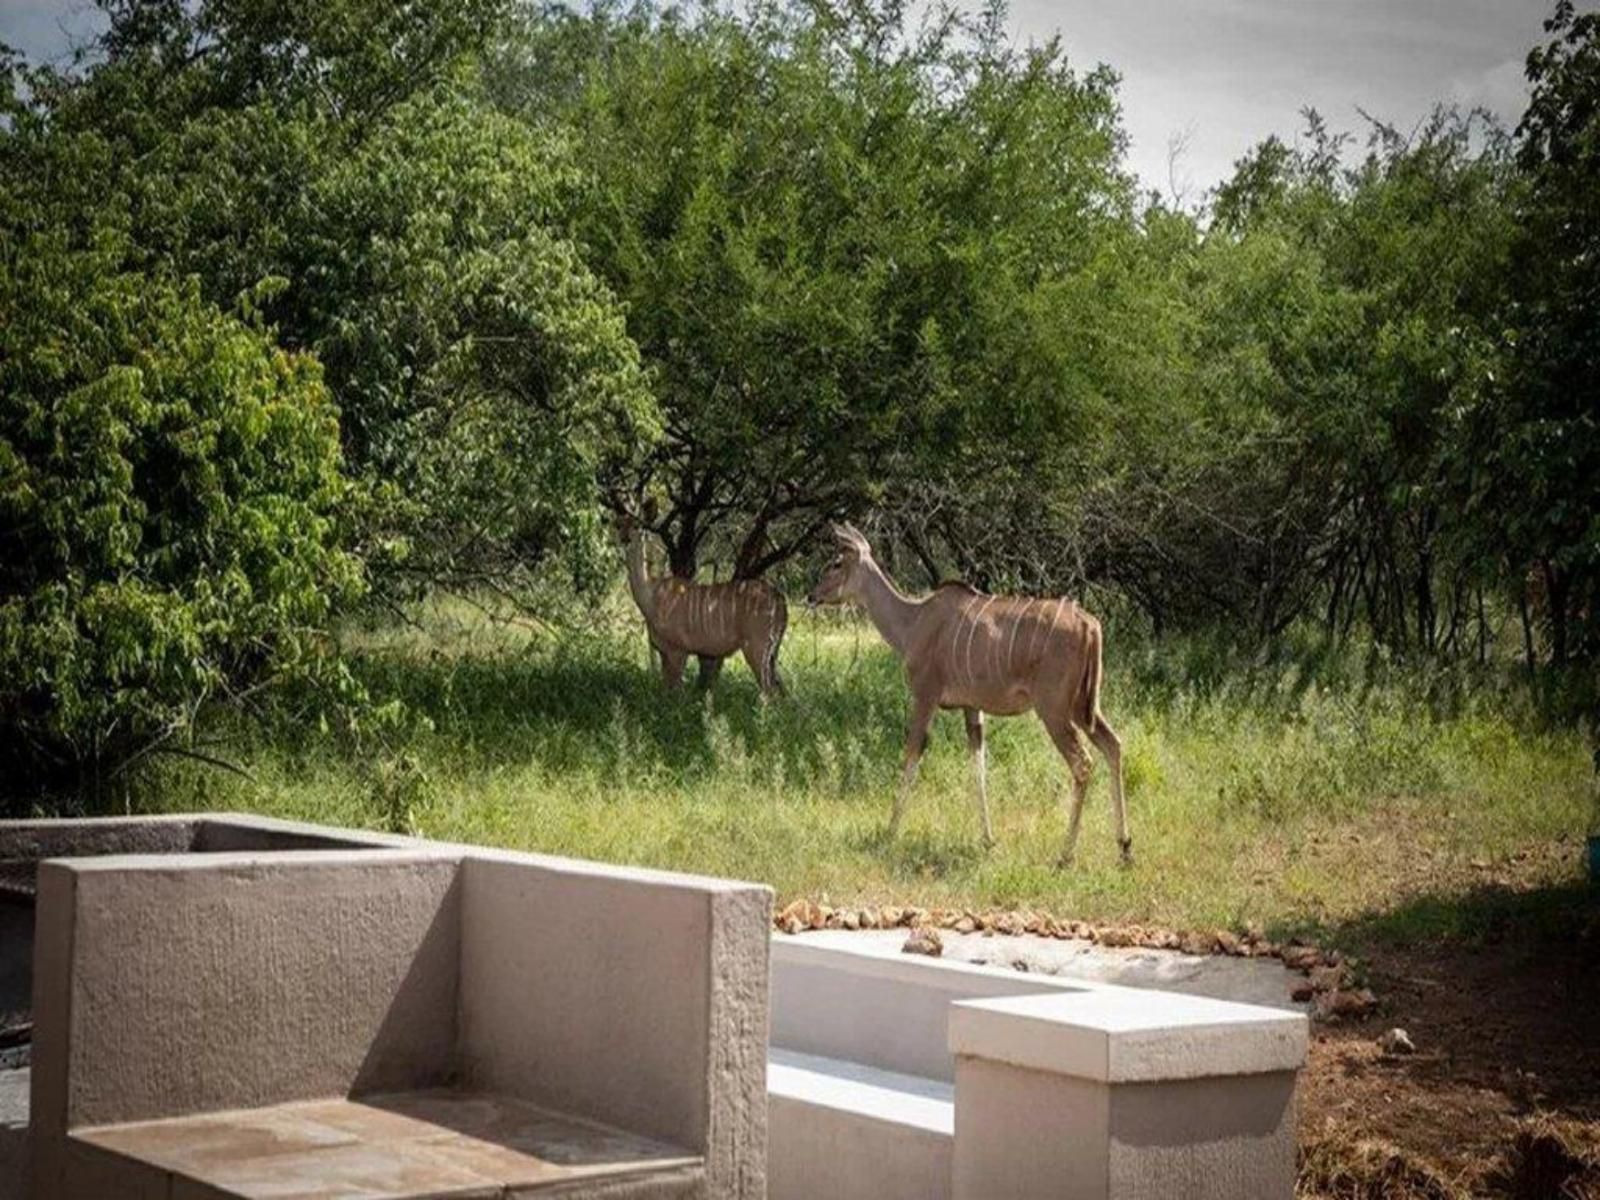 Impala Lily Marloth Park Mpumalanga South Africa Deer, Mammal, Animal, Herbivore